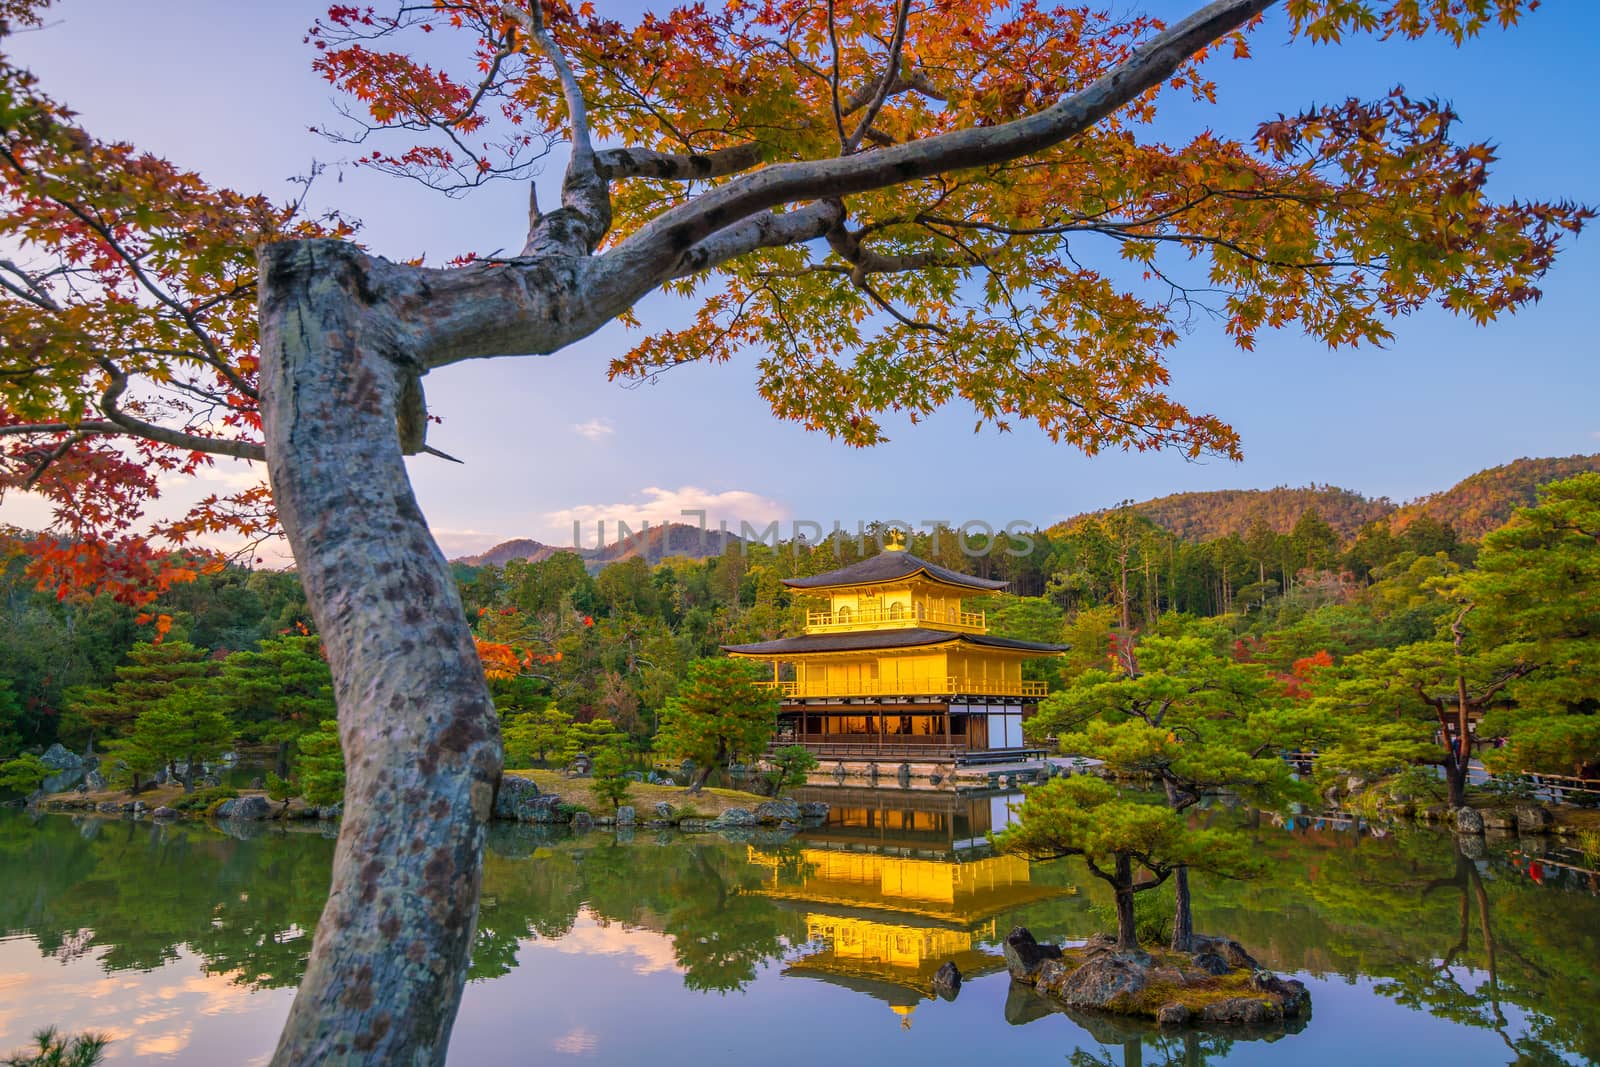 The Golden Pavilion of Kinkaku-ji temple in Kyoto, Japan by f11photo